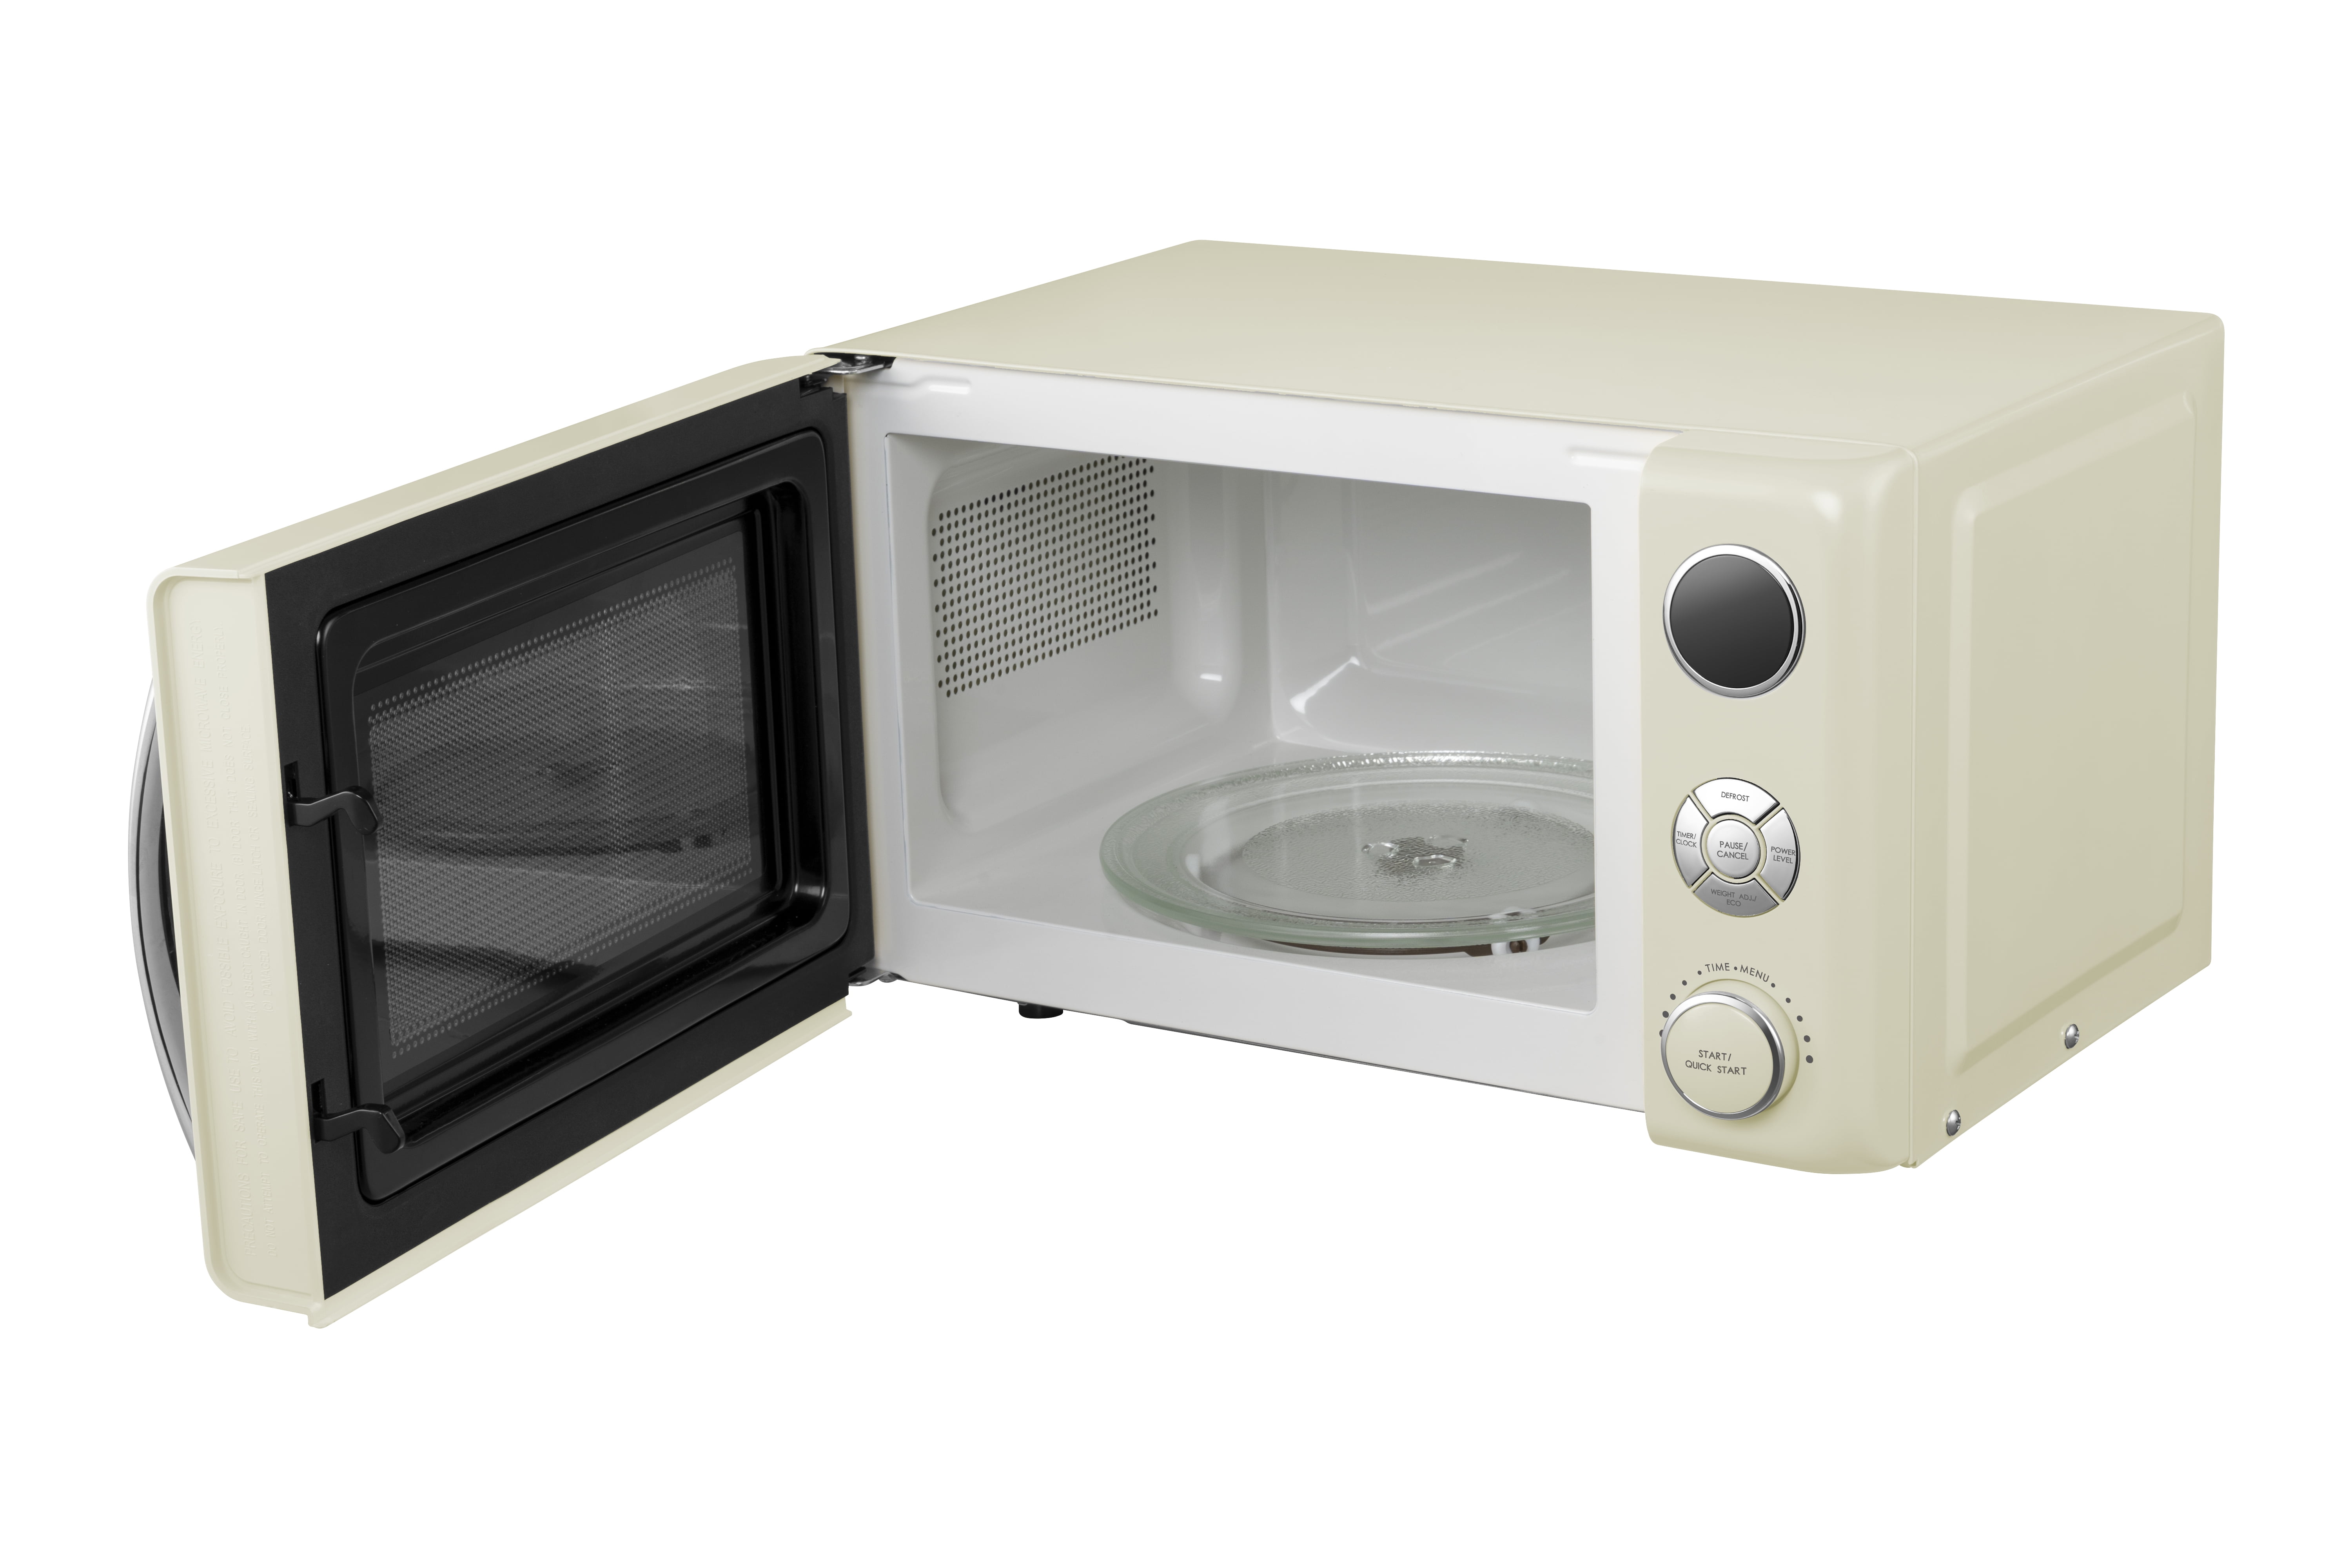 TUNDRA MW Series – 120 Volt Truck Microwave Oven – 0.7 Ft³ / 20 L / 700 W /  M